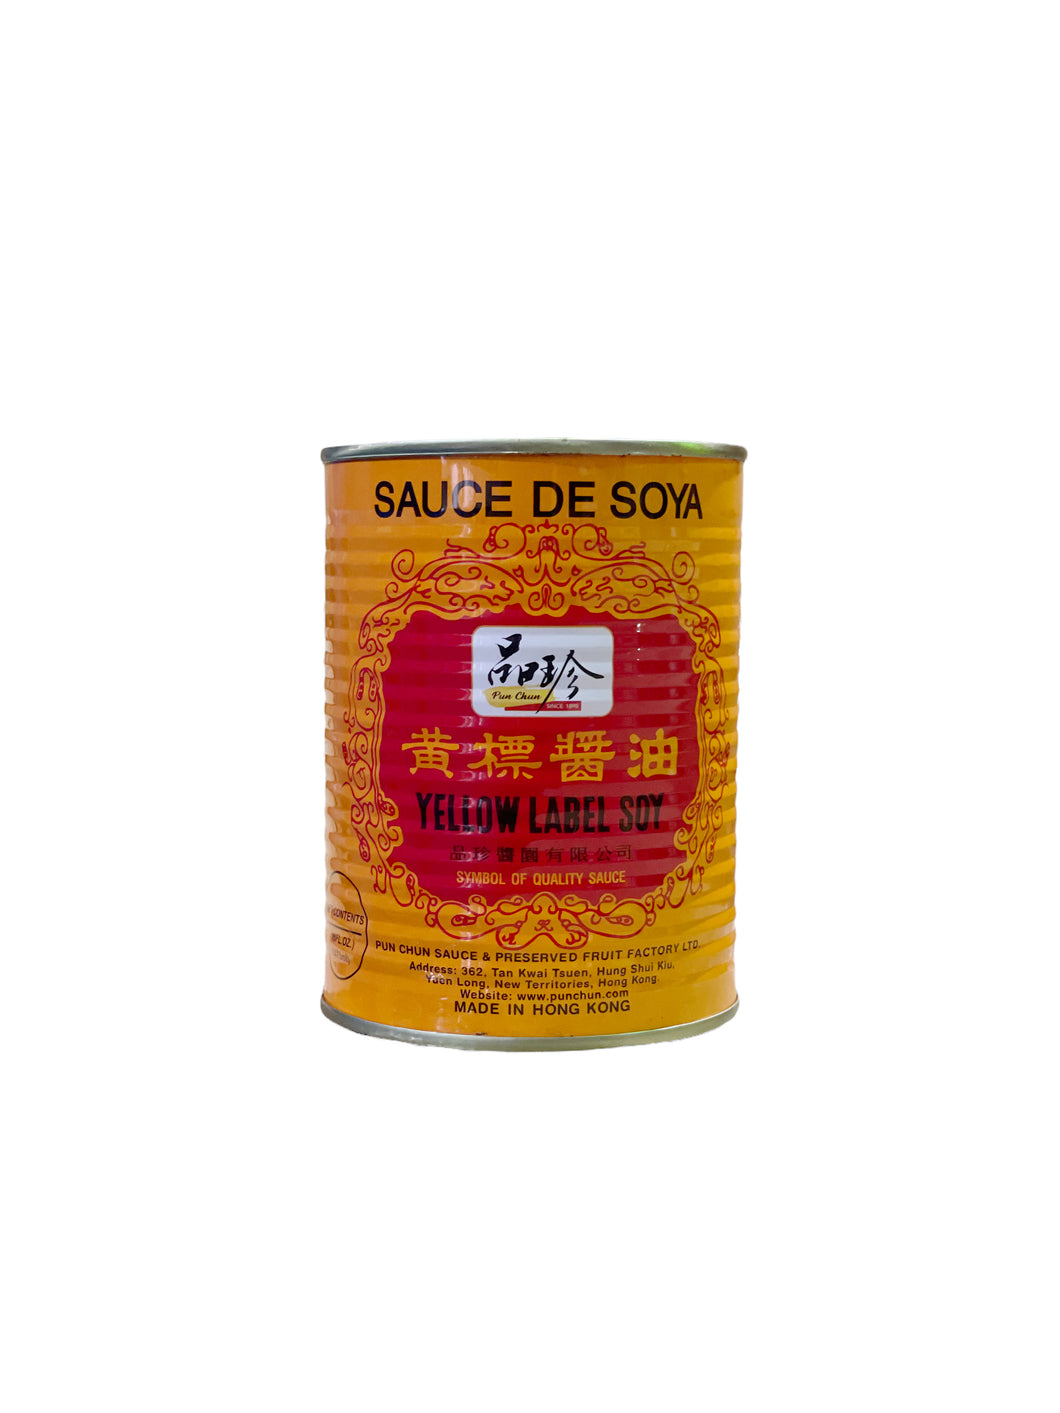 Pun Chun Yellow Label Soy Sauce 473ml 品珍黄标酱油16oz